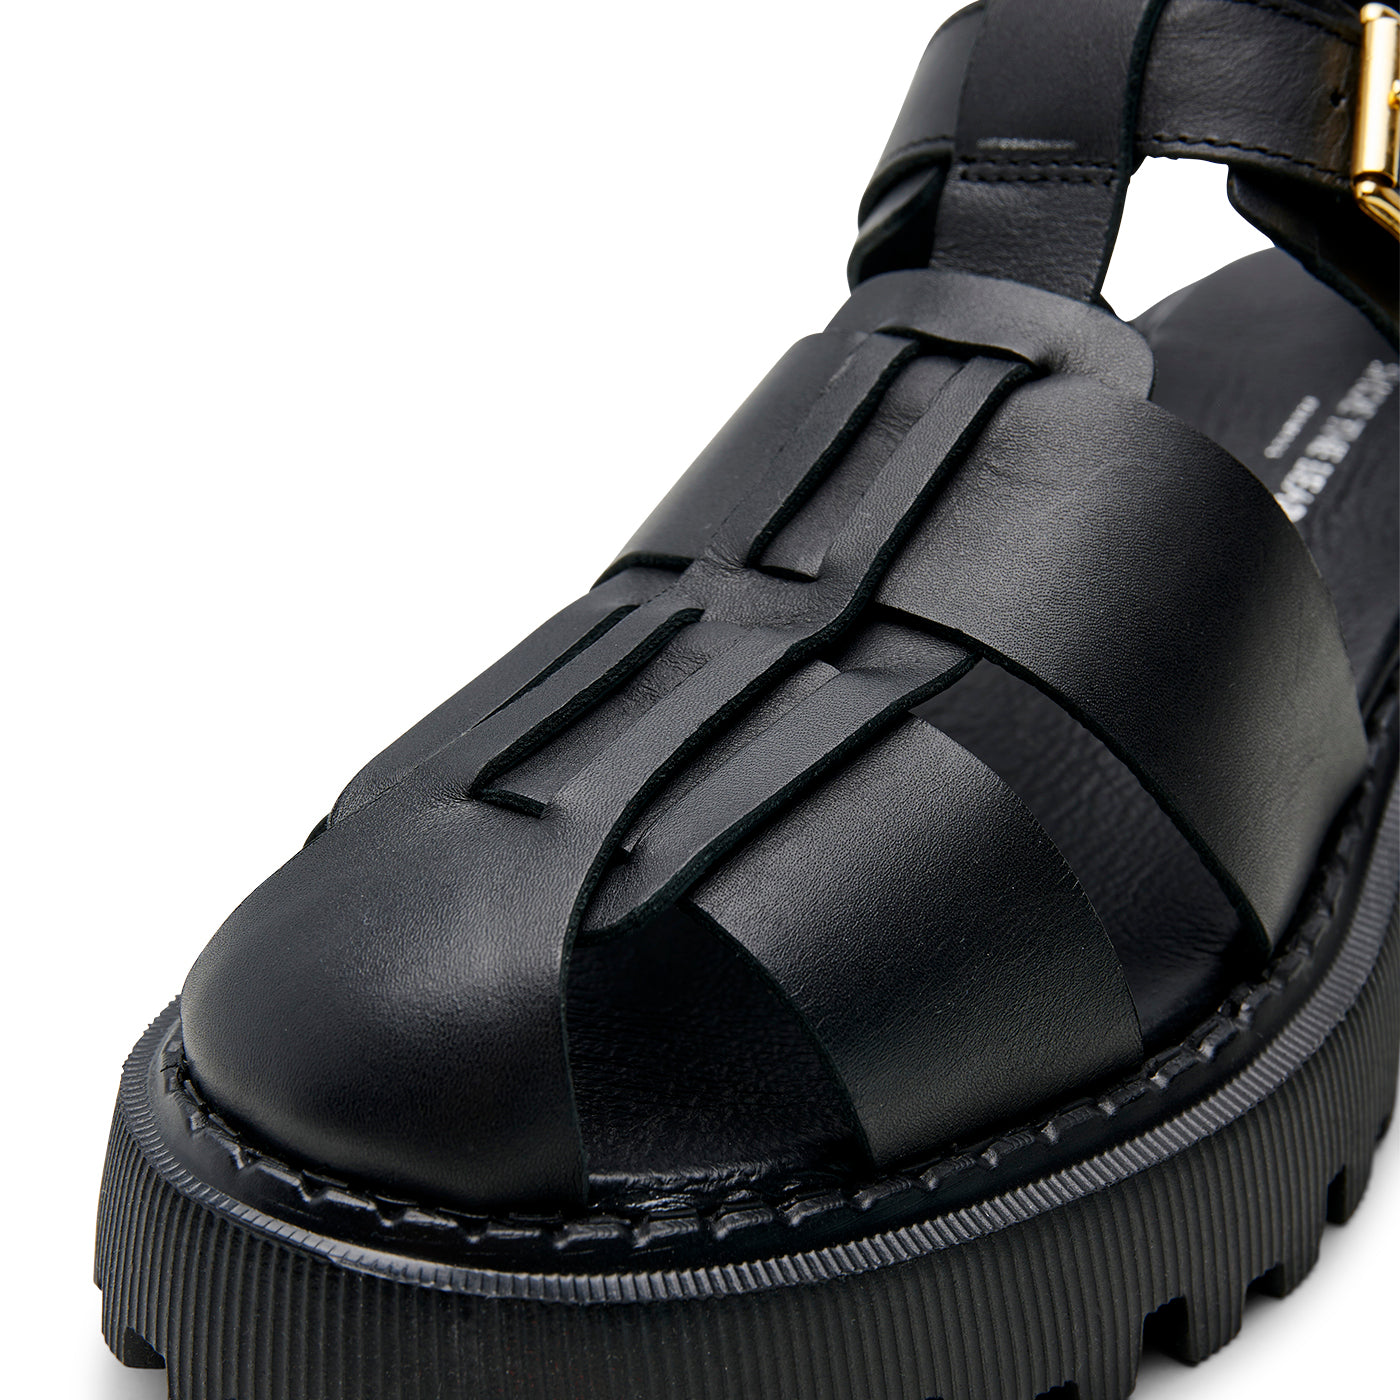 SHOE THE BEAR WOMENS Posey sandal læder Sandals 110 BLACK